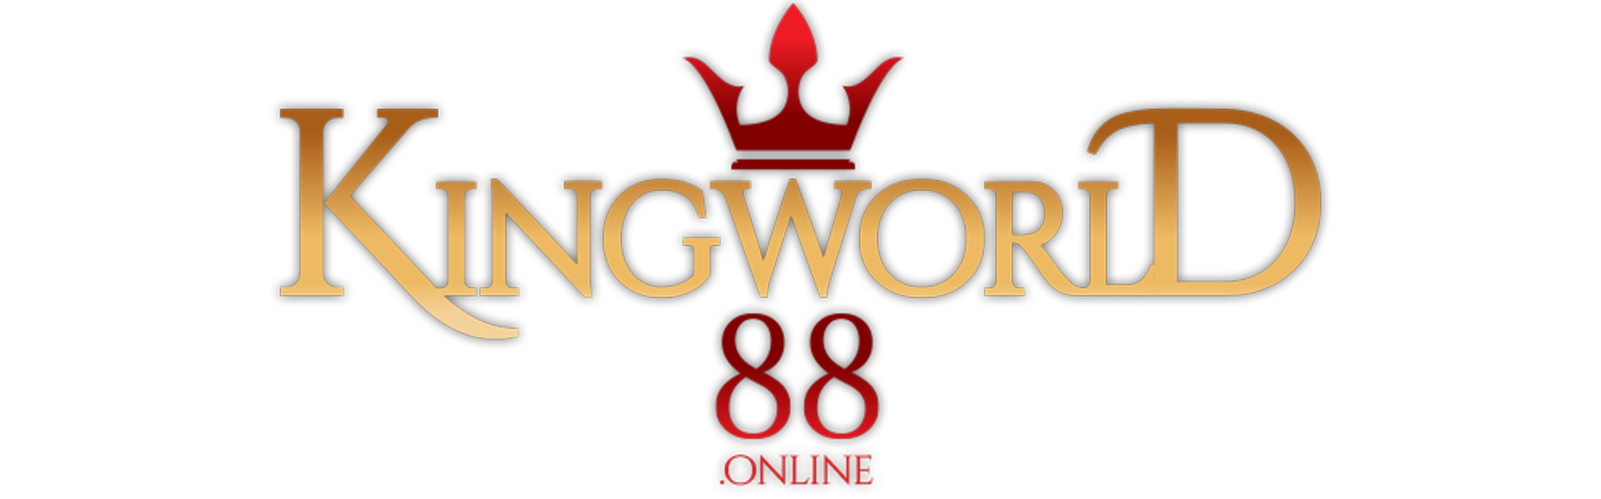 KINGWORLD88 อันดับ 1 เรื่อง เว็บพนันออนไลน์